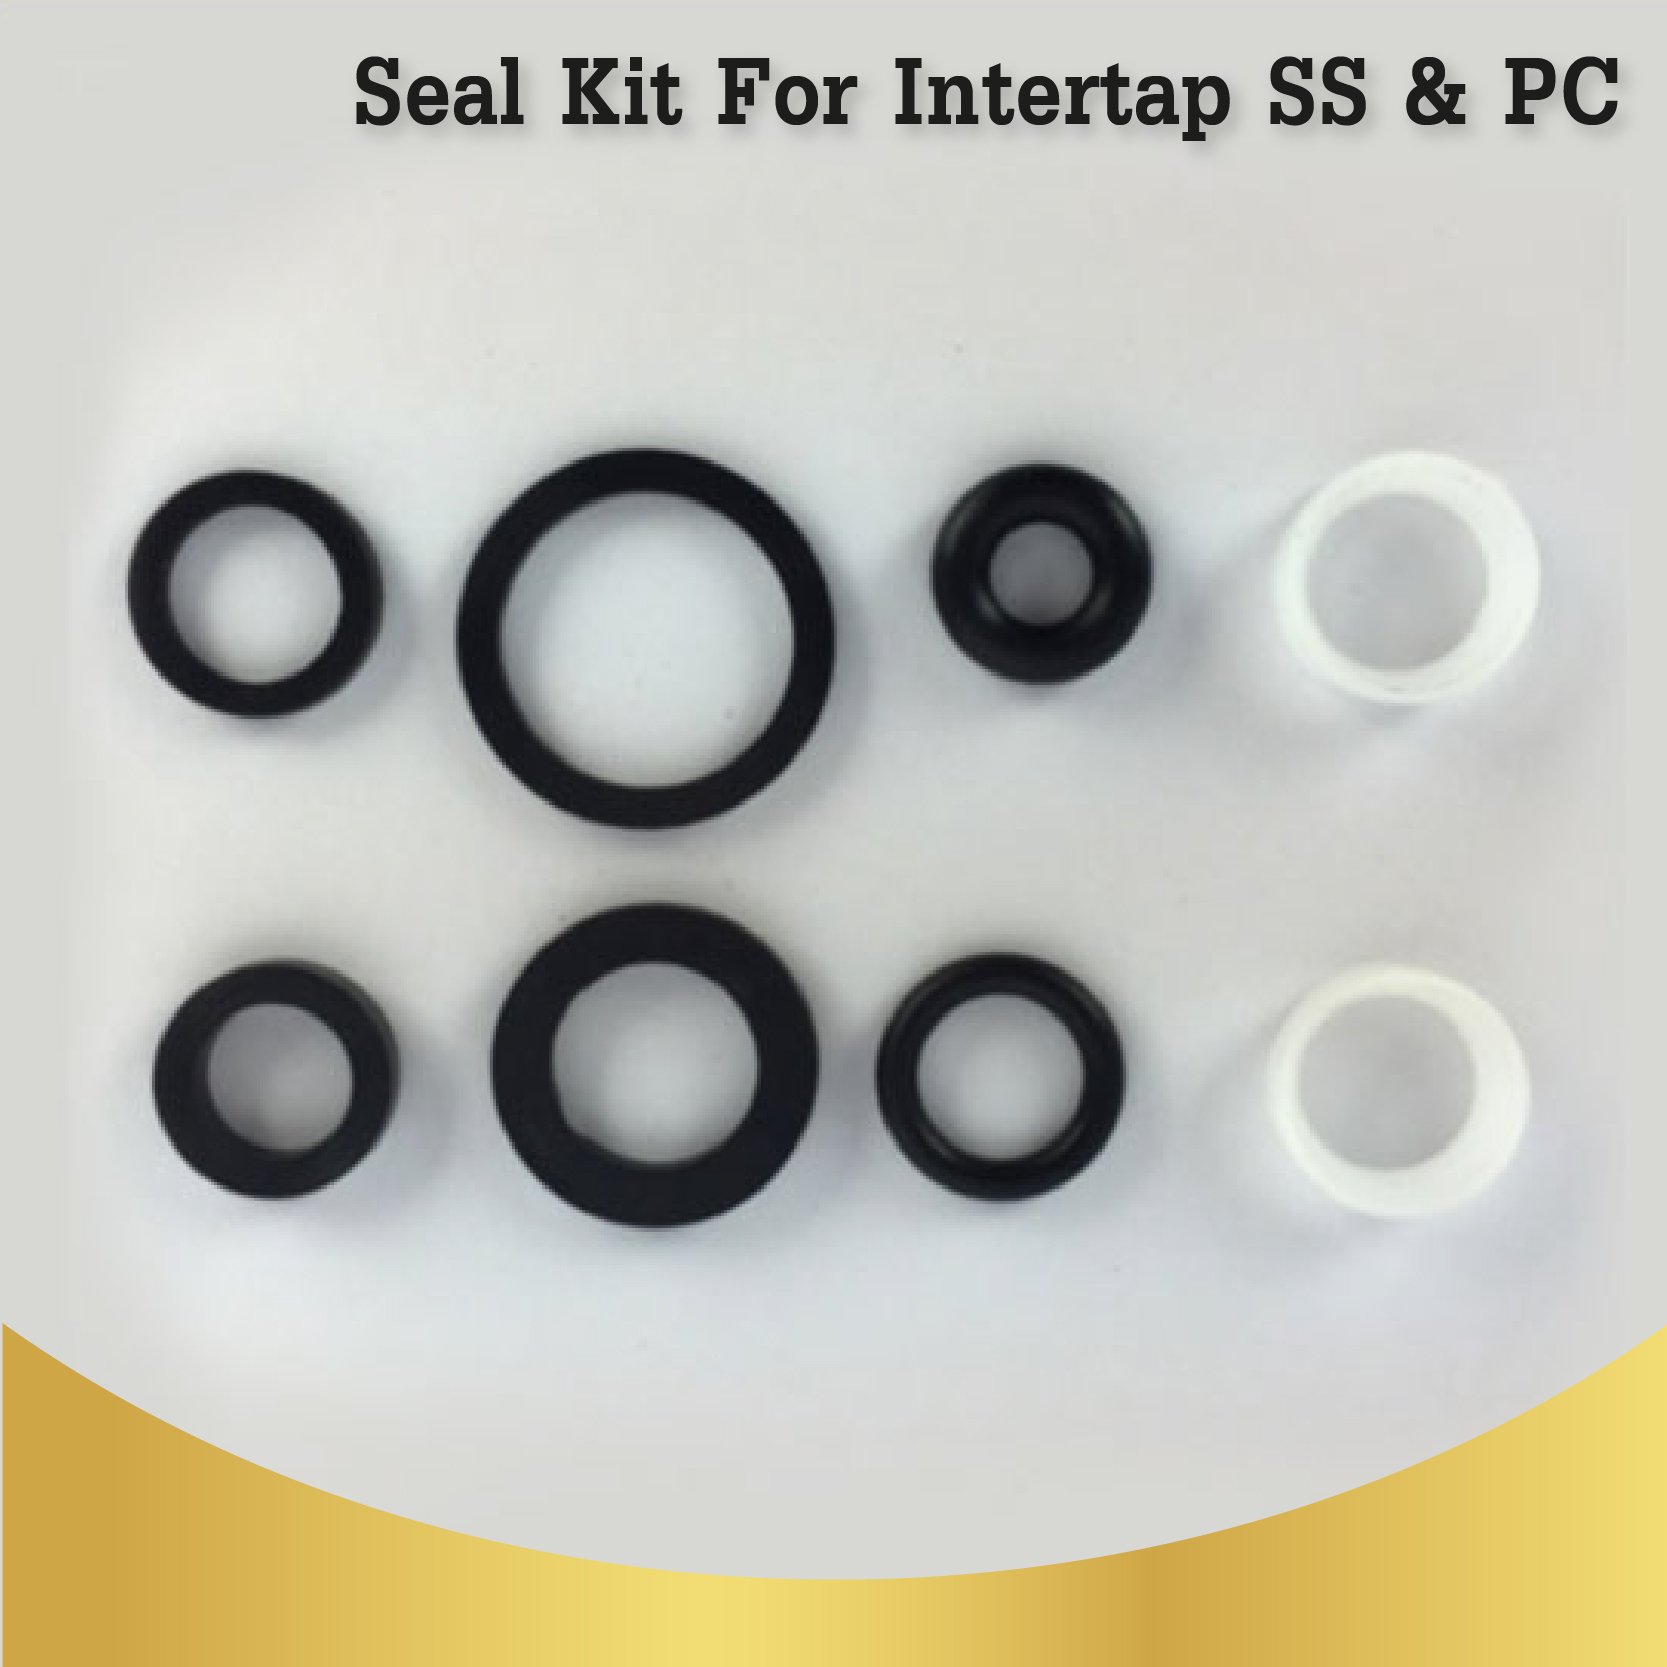 Seal Kit For Intertap SS & PC